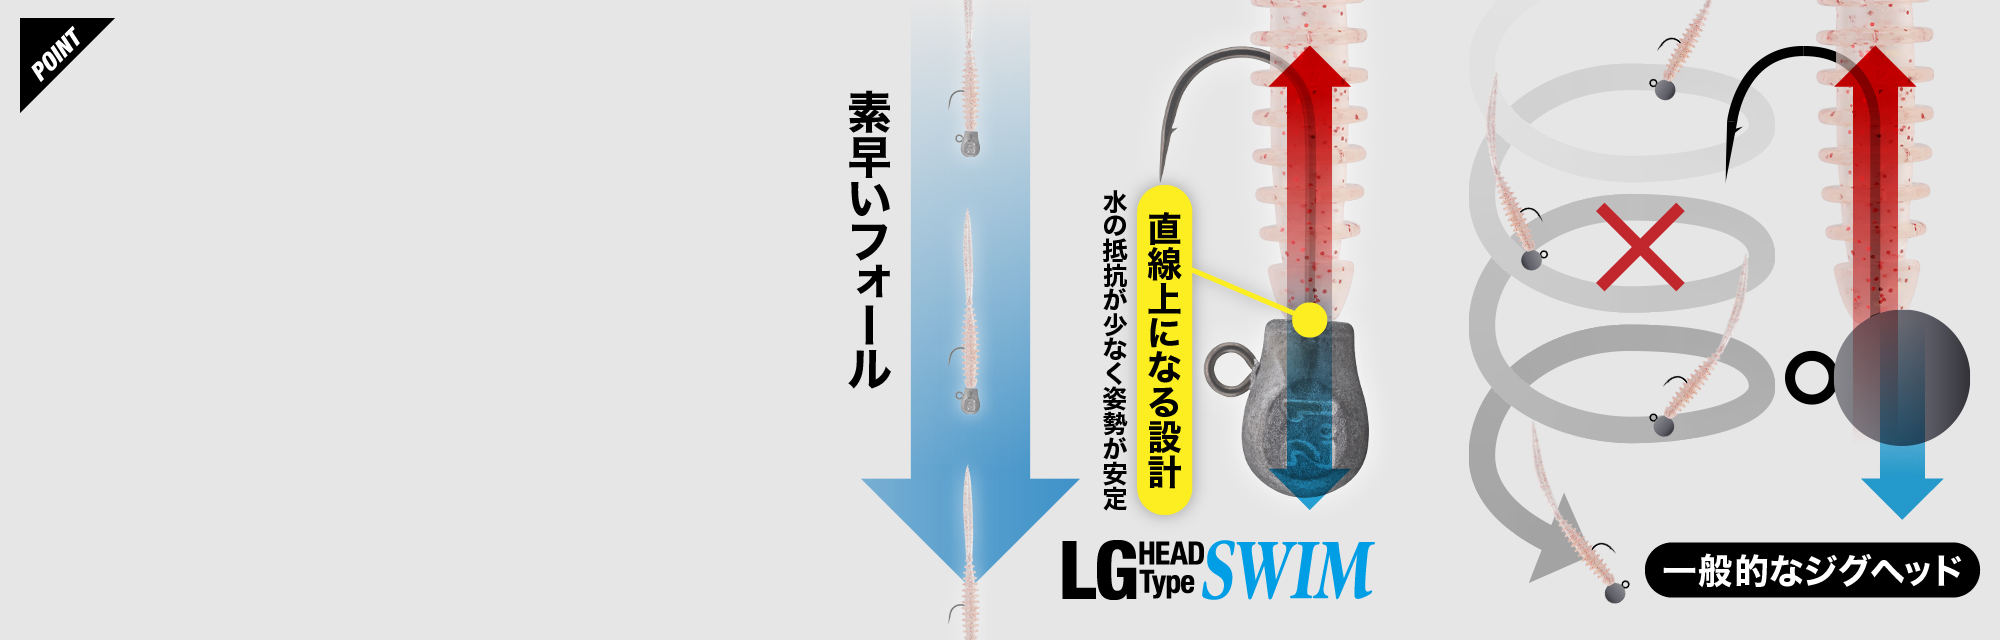 LGヘッド タイプ SWIM LG HEAD Type SWIM 